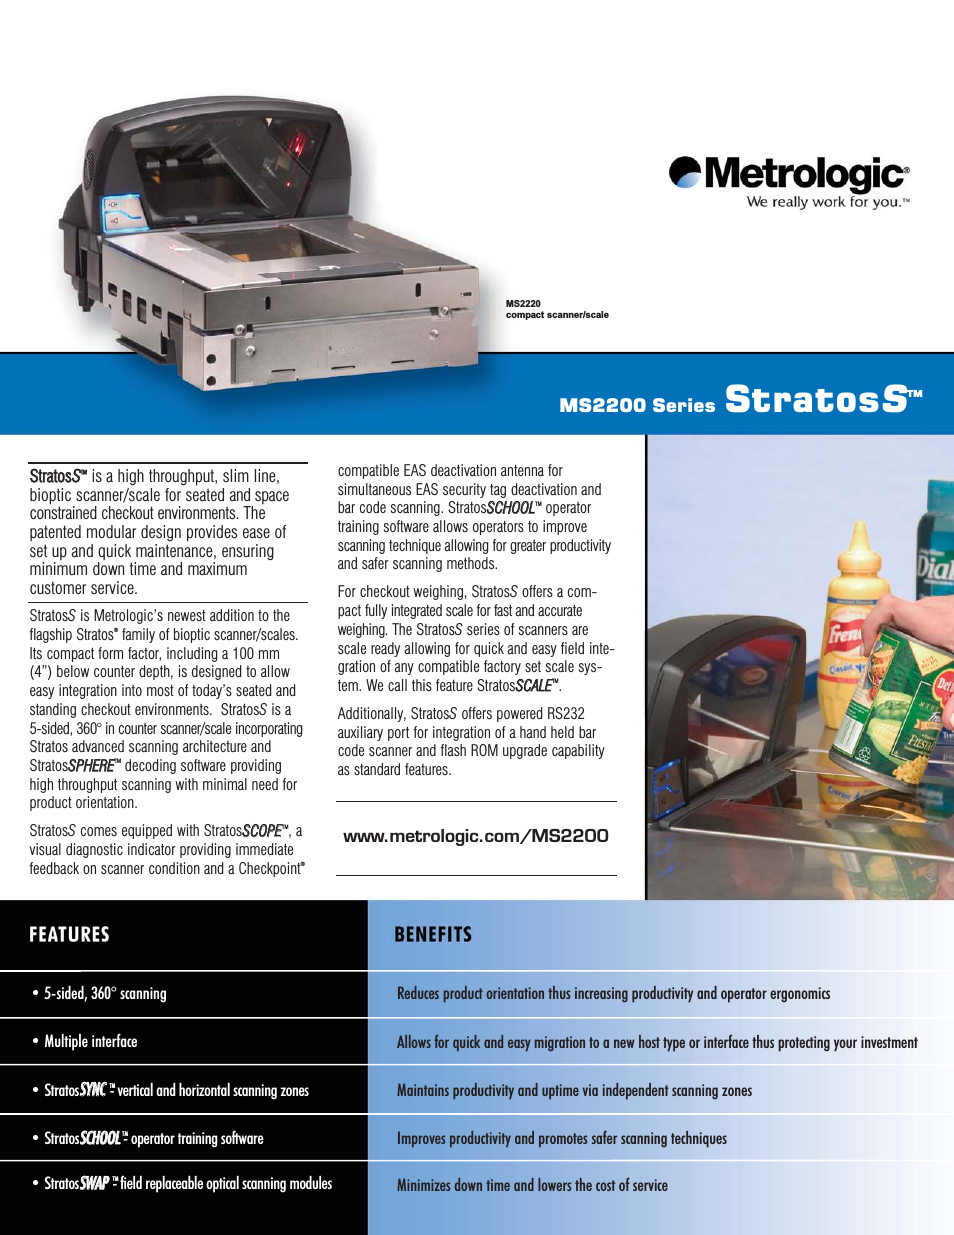 StratosS MS2200 Series